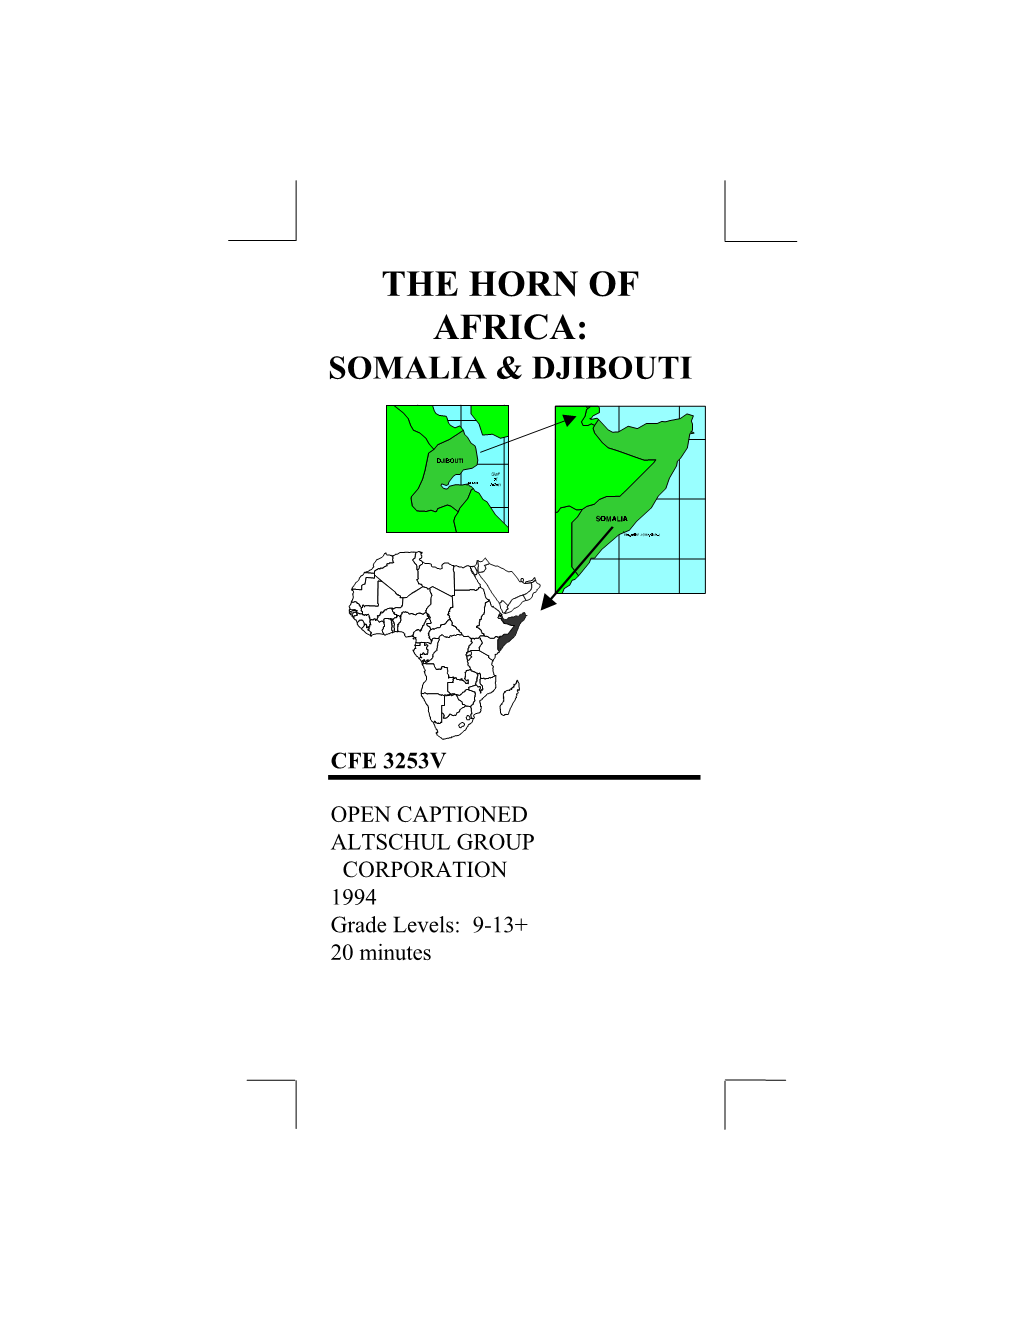 3253 the Horn of Africa: Somalia & Djibouti